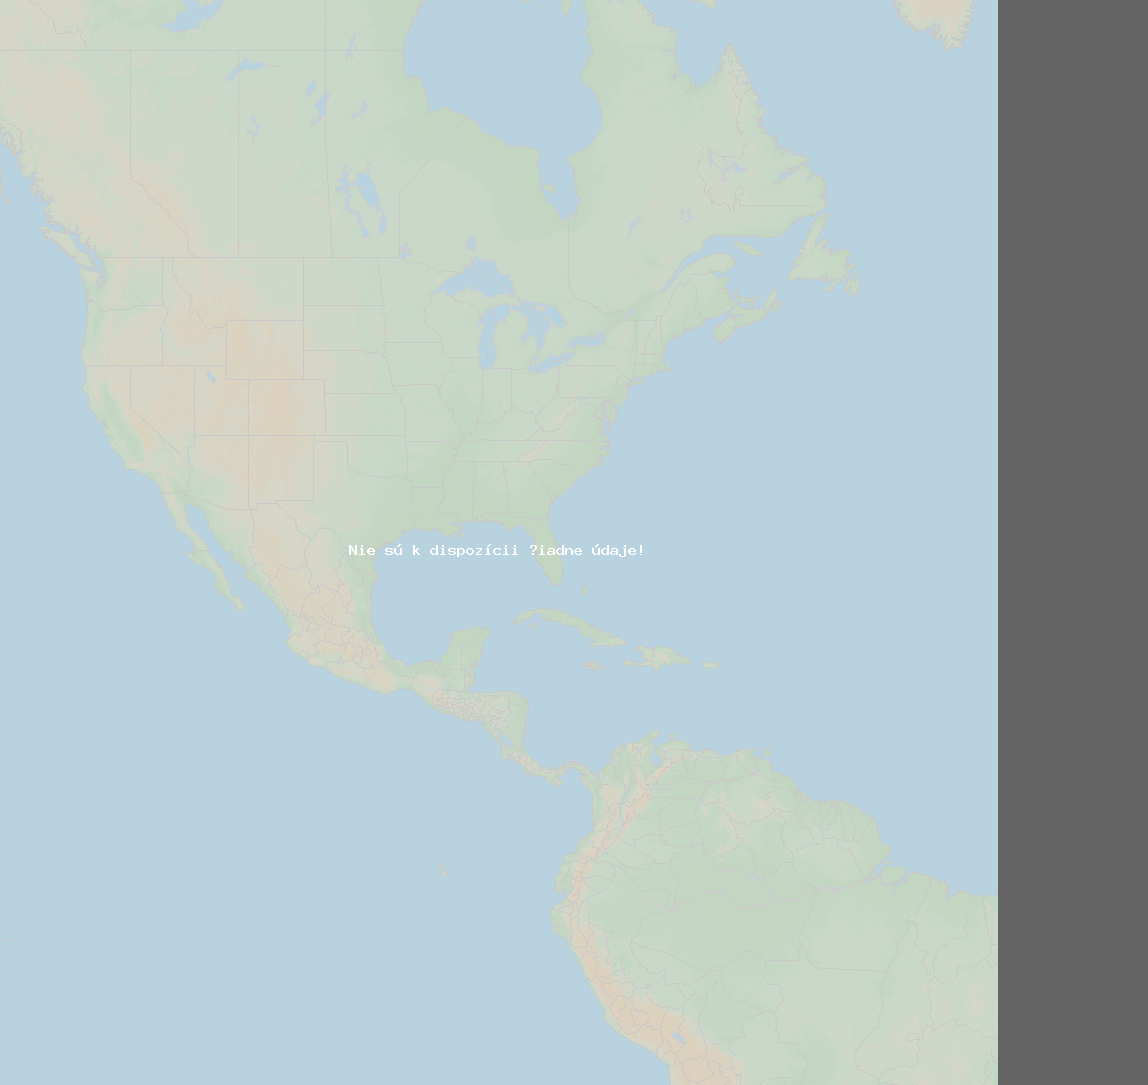 Pomer bleskov (Stanica Milton) North America 2020 